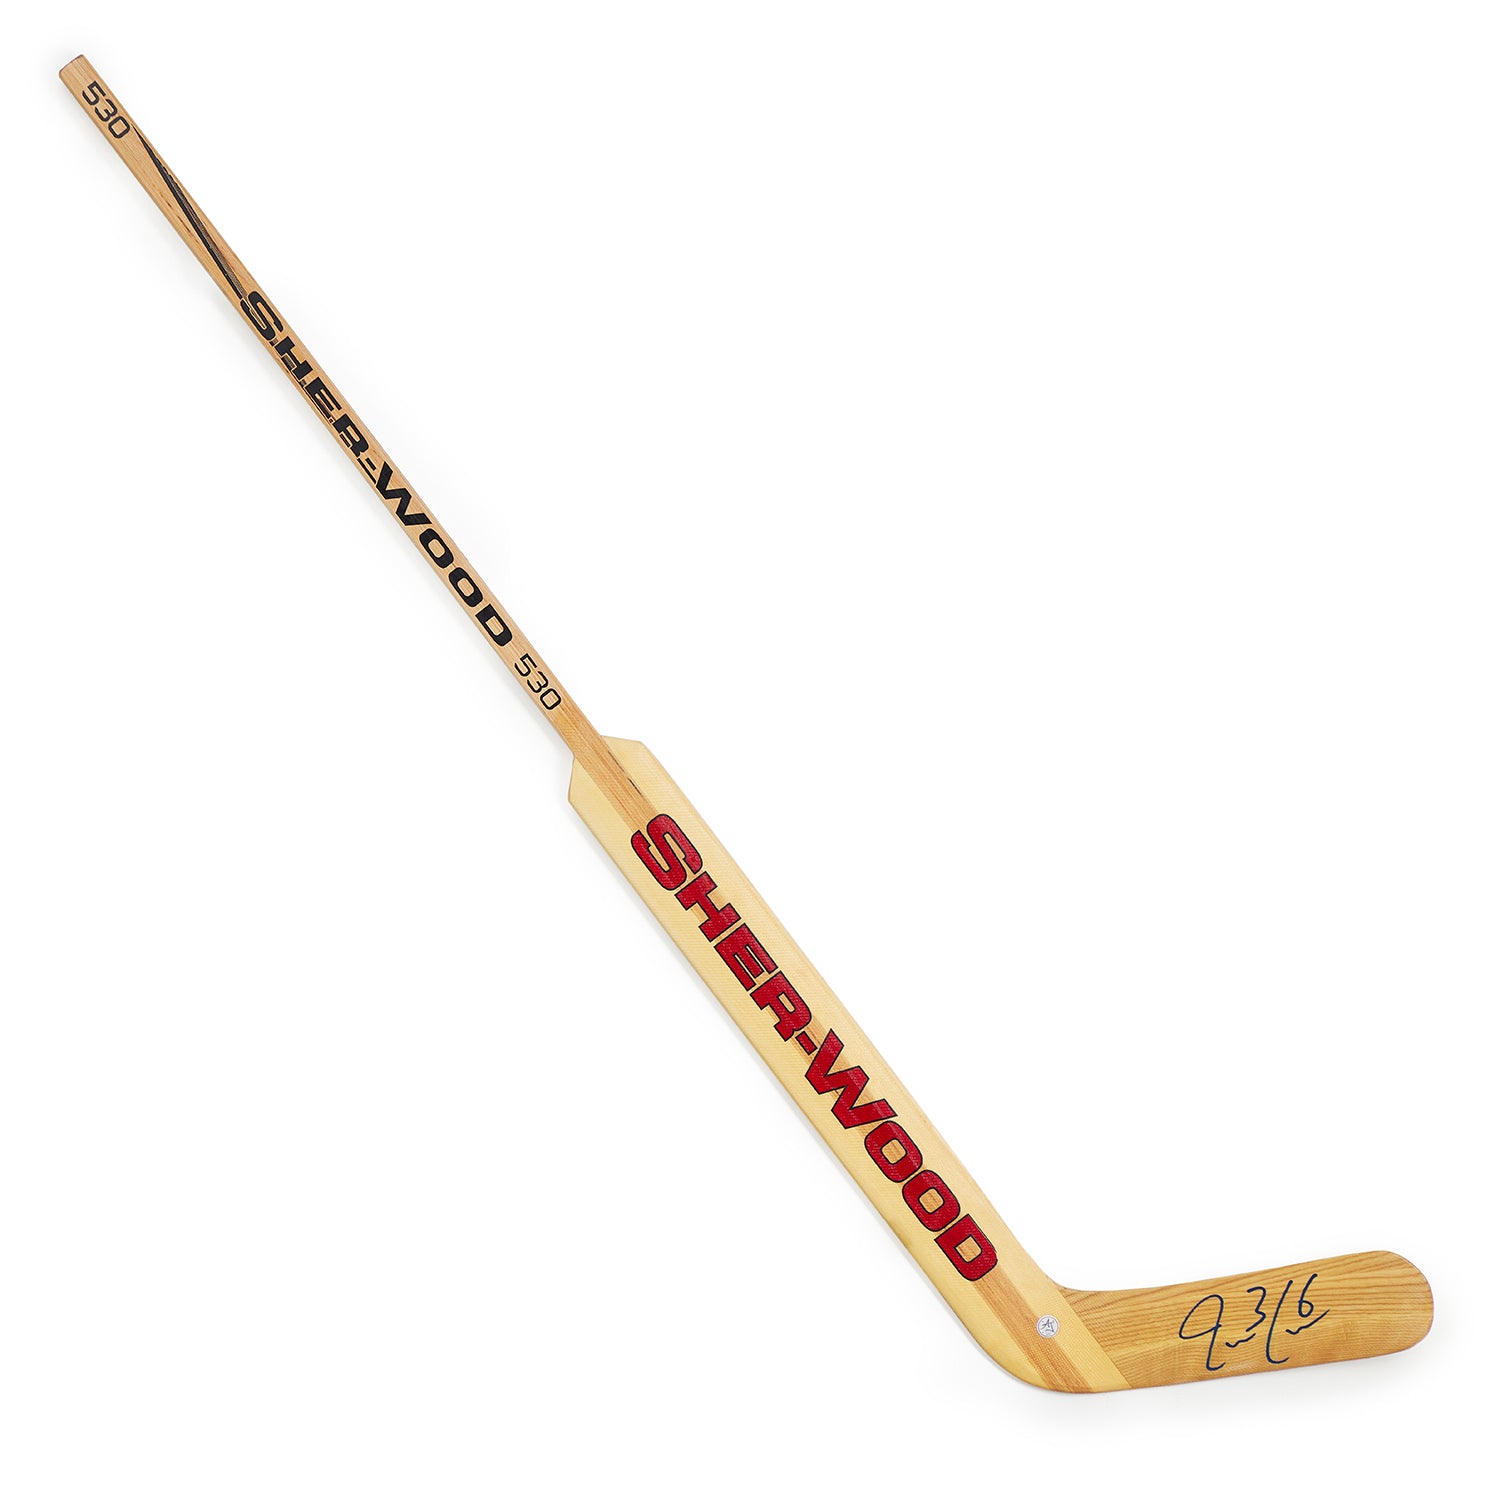 Jack Campbell Autographed Sher-Wood Goalie Stick